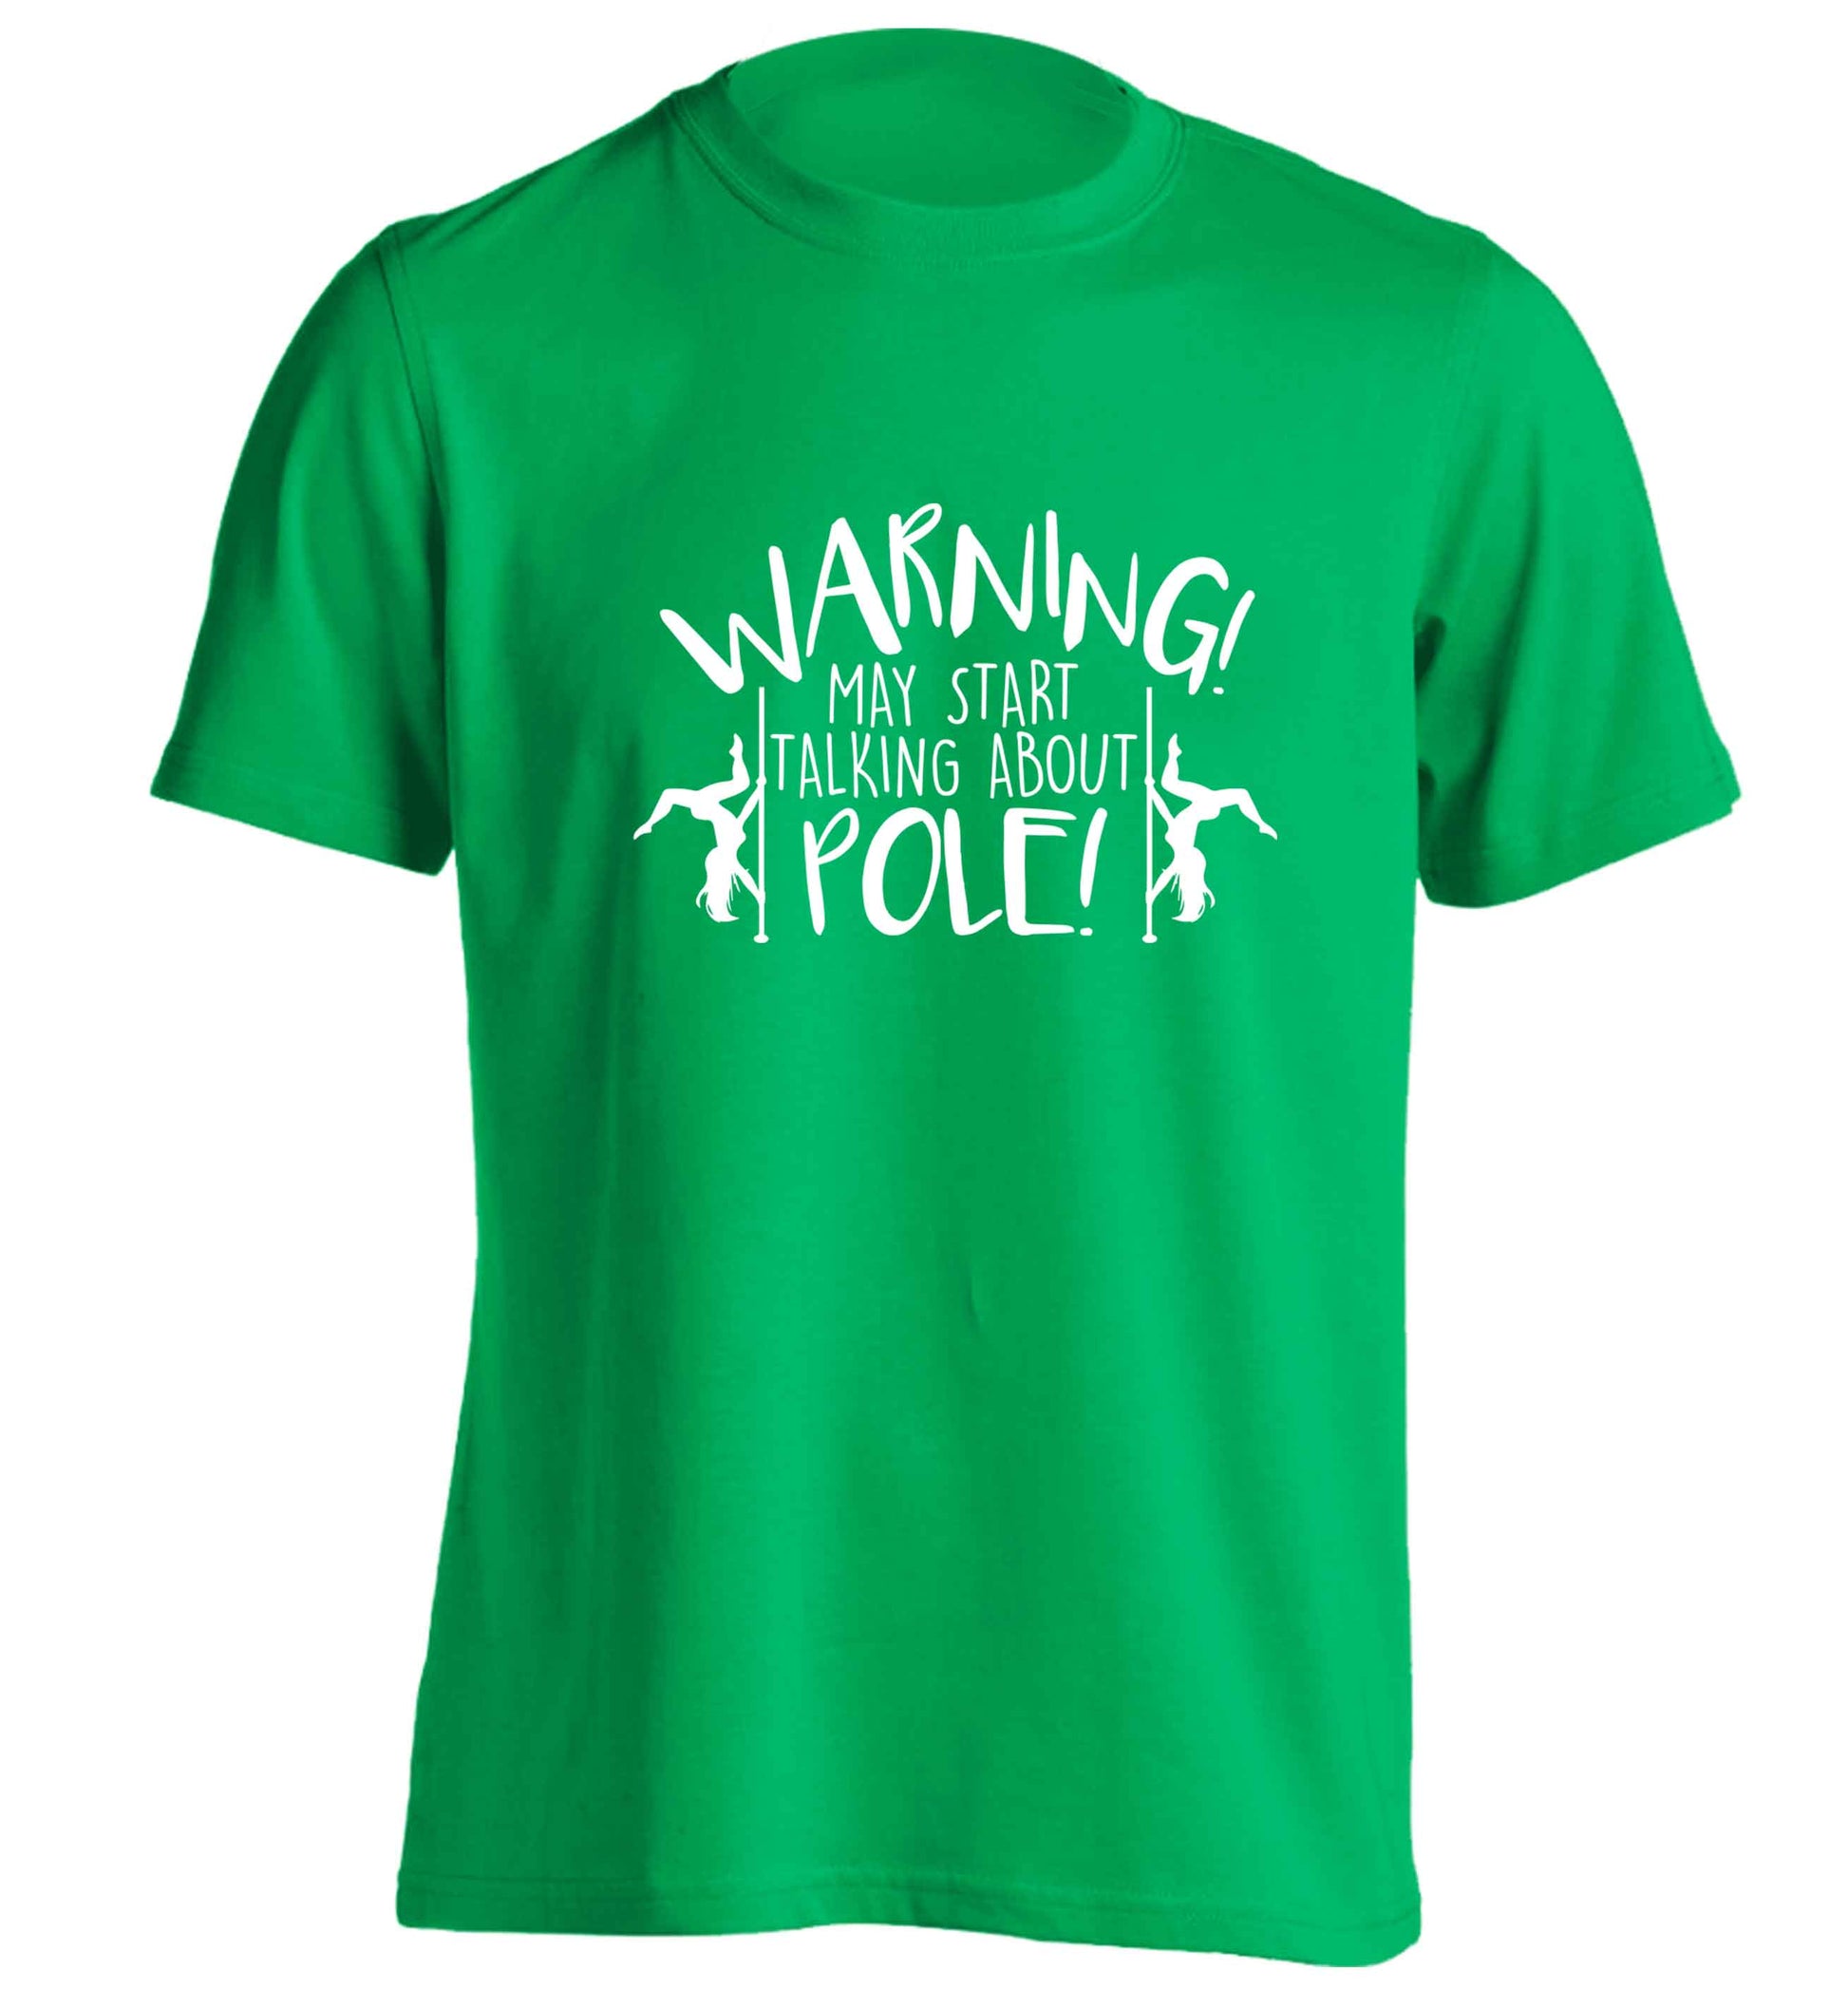 Warning may start talking about pole  adults unisex green Tshirt 2XL